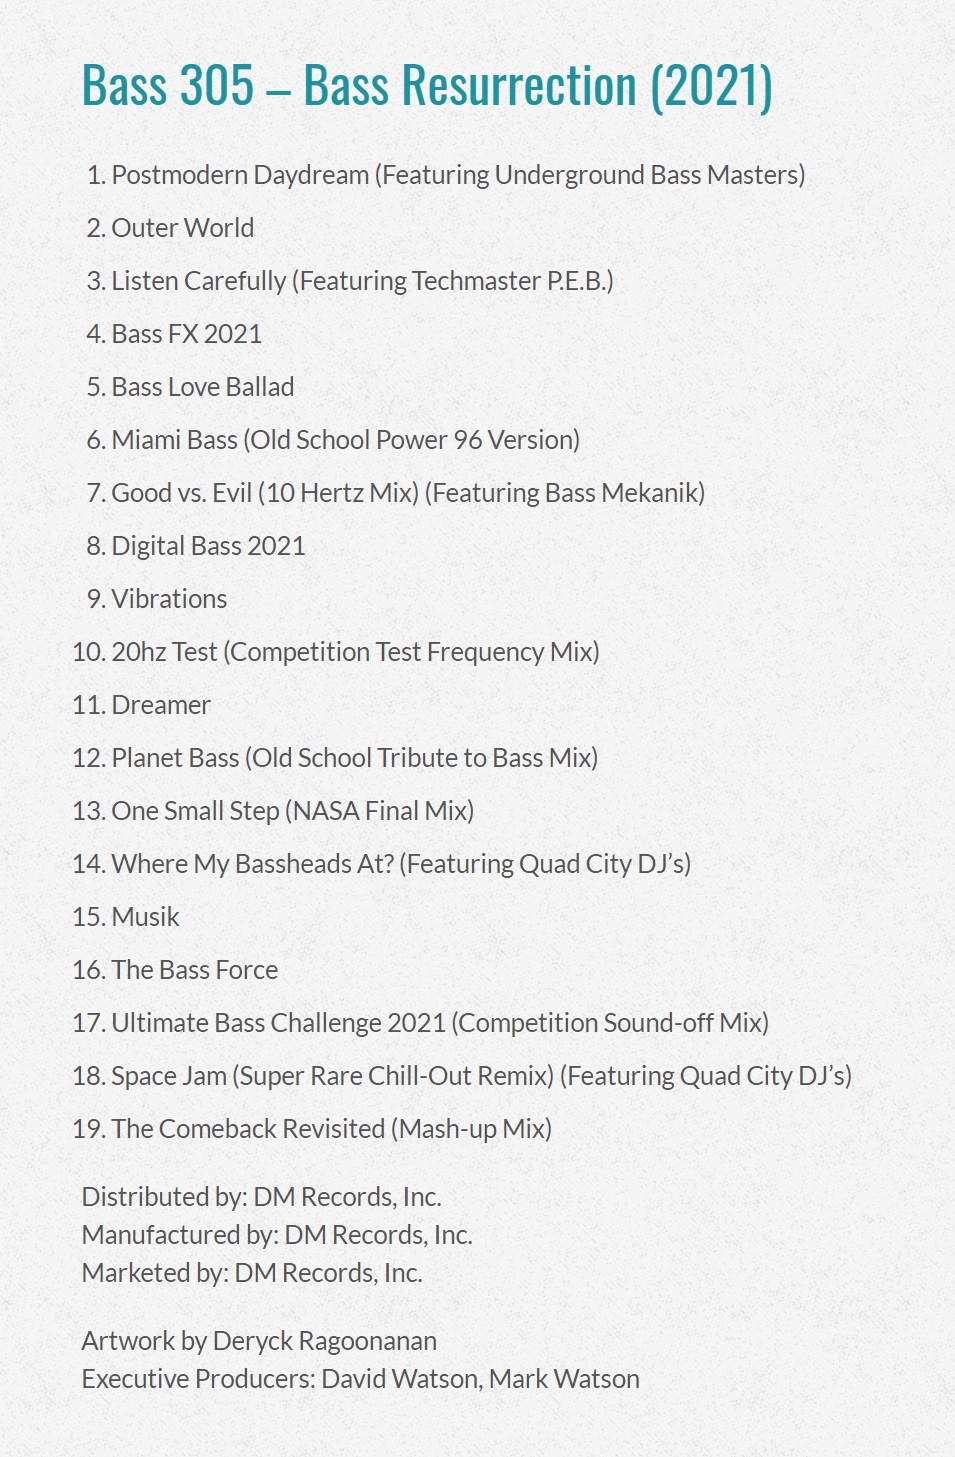 the tracklist of Bass 305's Bass Resurrection album